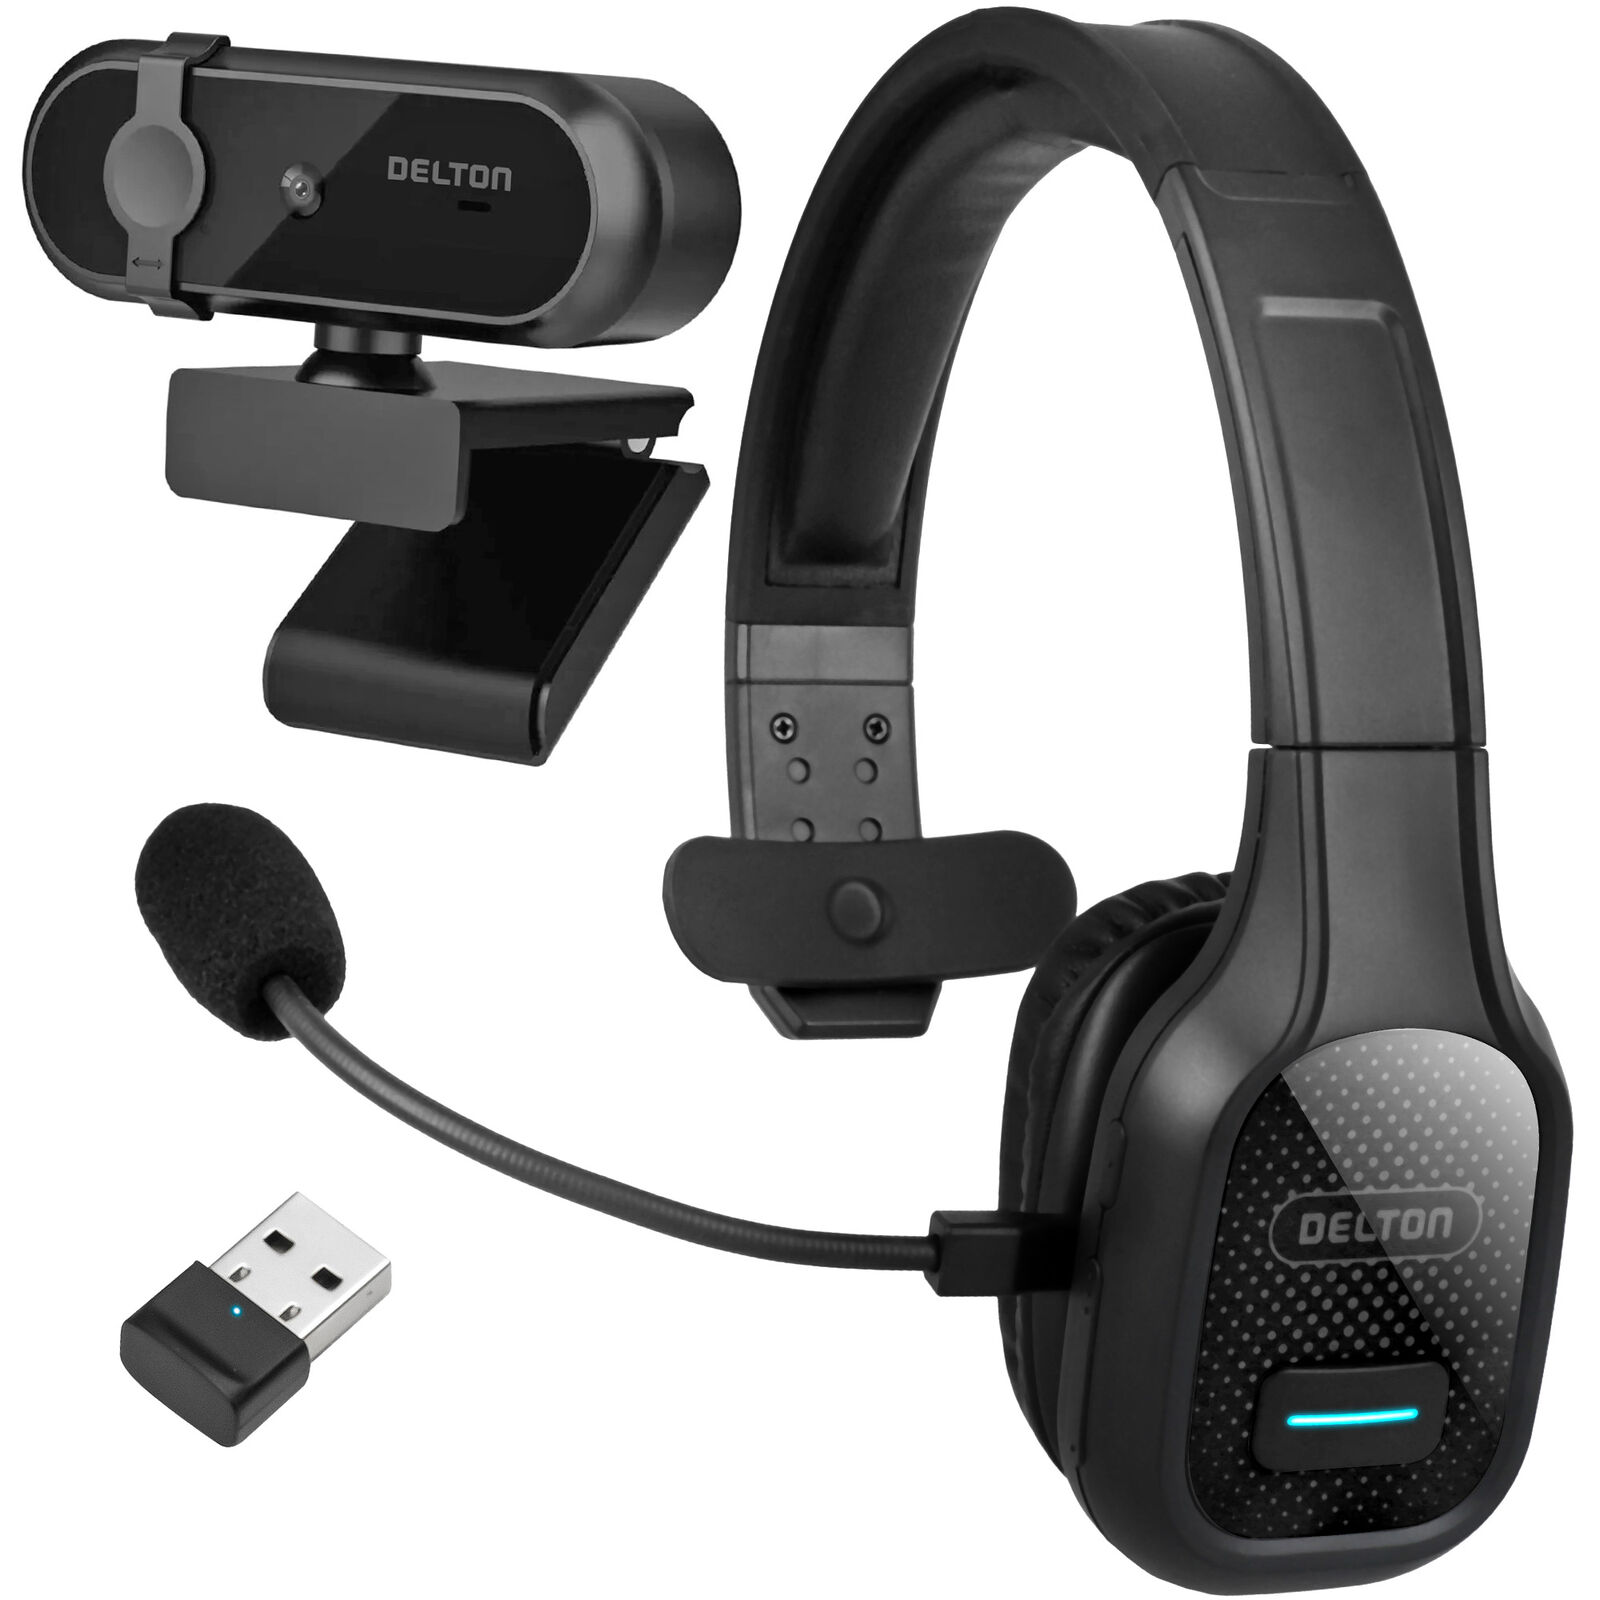 Delton Professional Wireless Computer Headset + Delton Webcam + USB Dongle